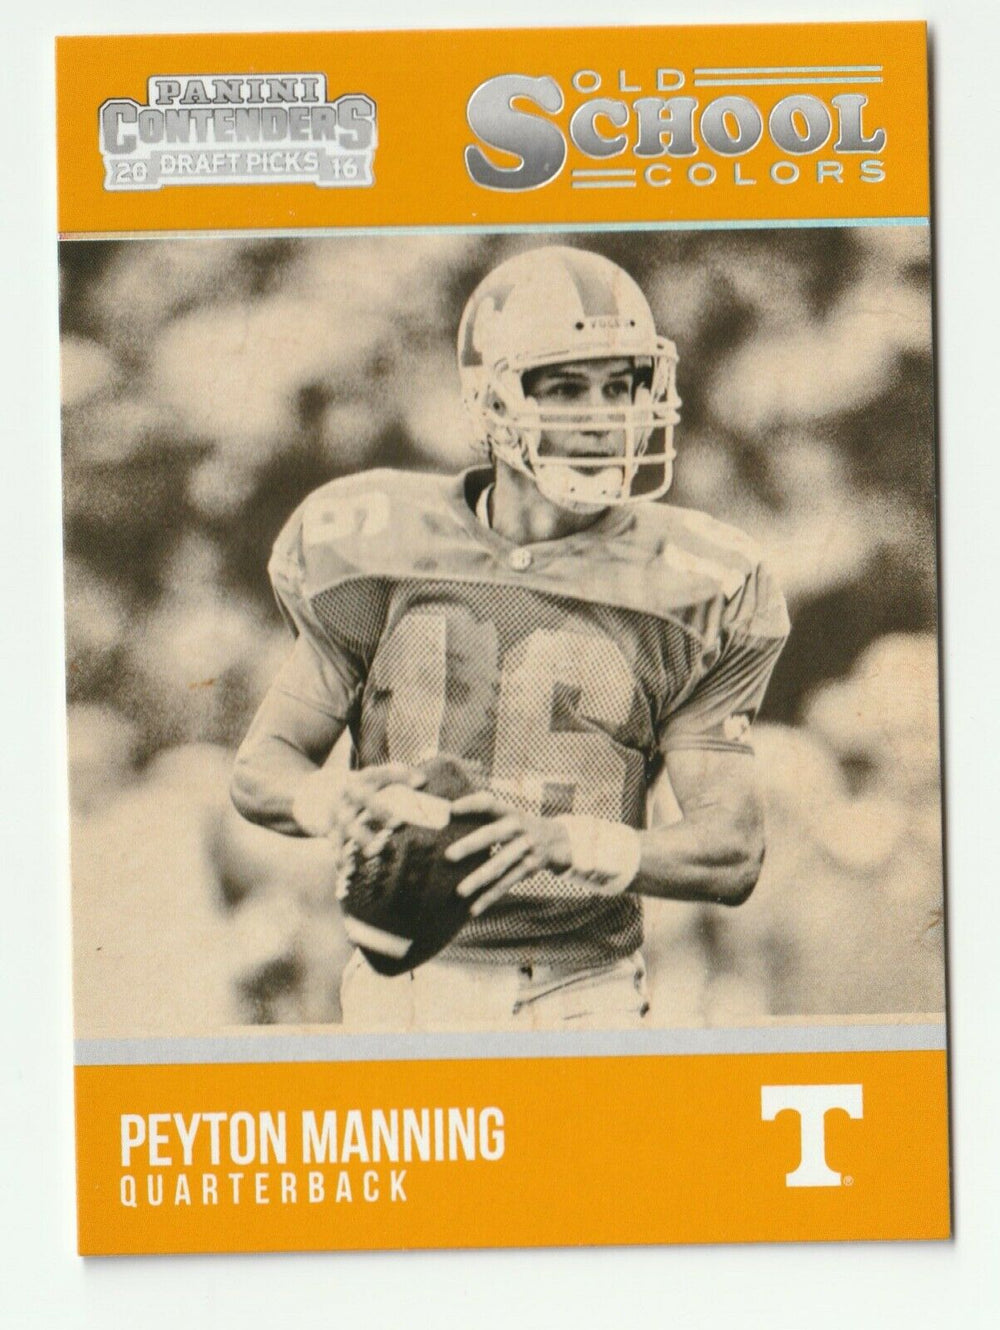 Peyton Manning 2016 Panini Contenders Draft Picks Old School Colors Series Mint Card #19